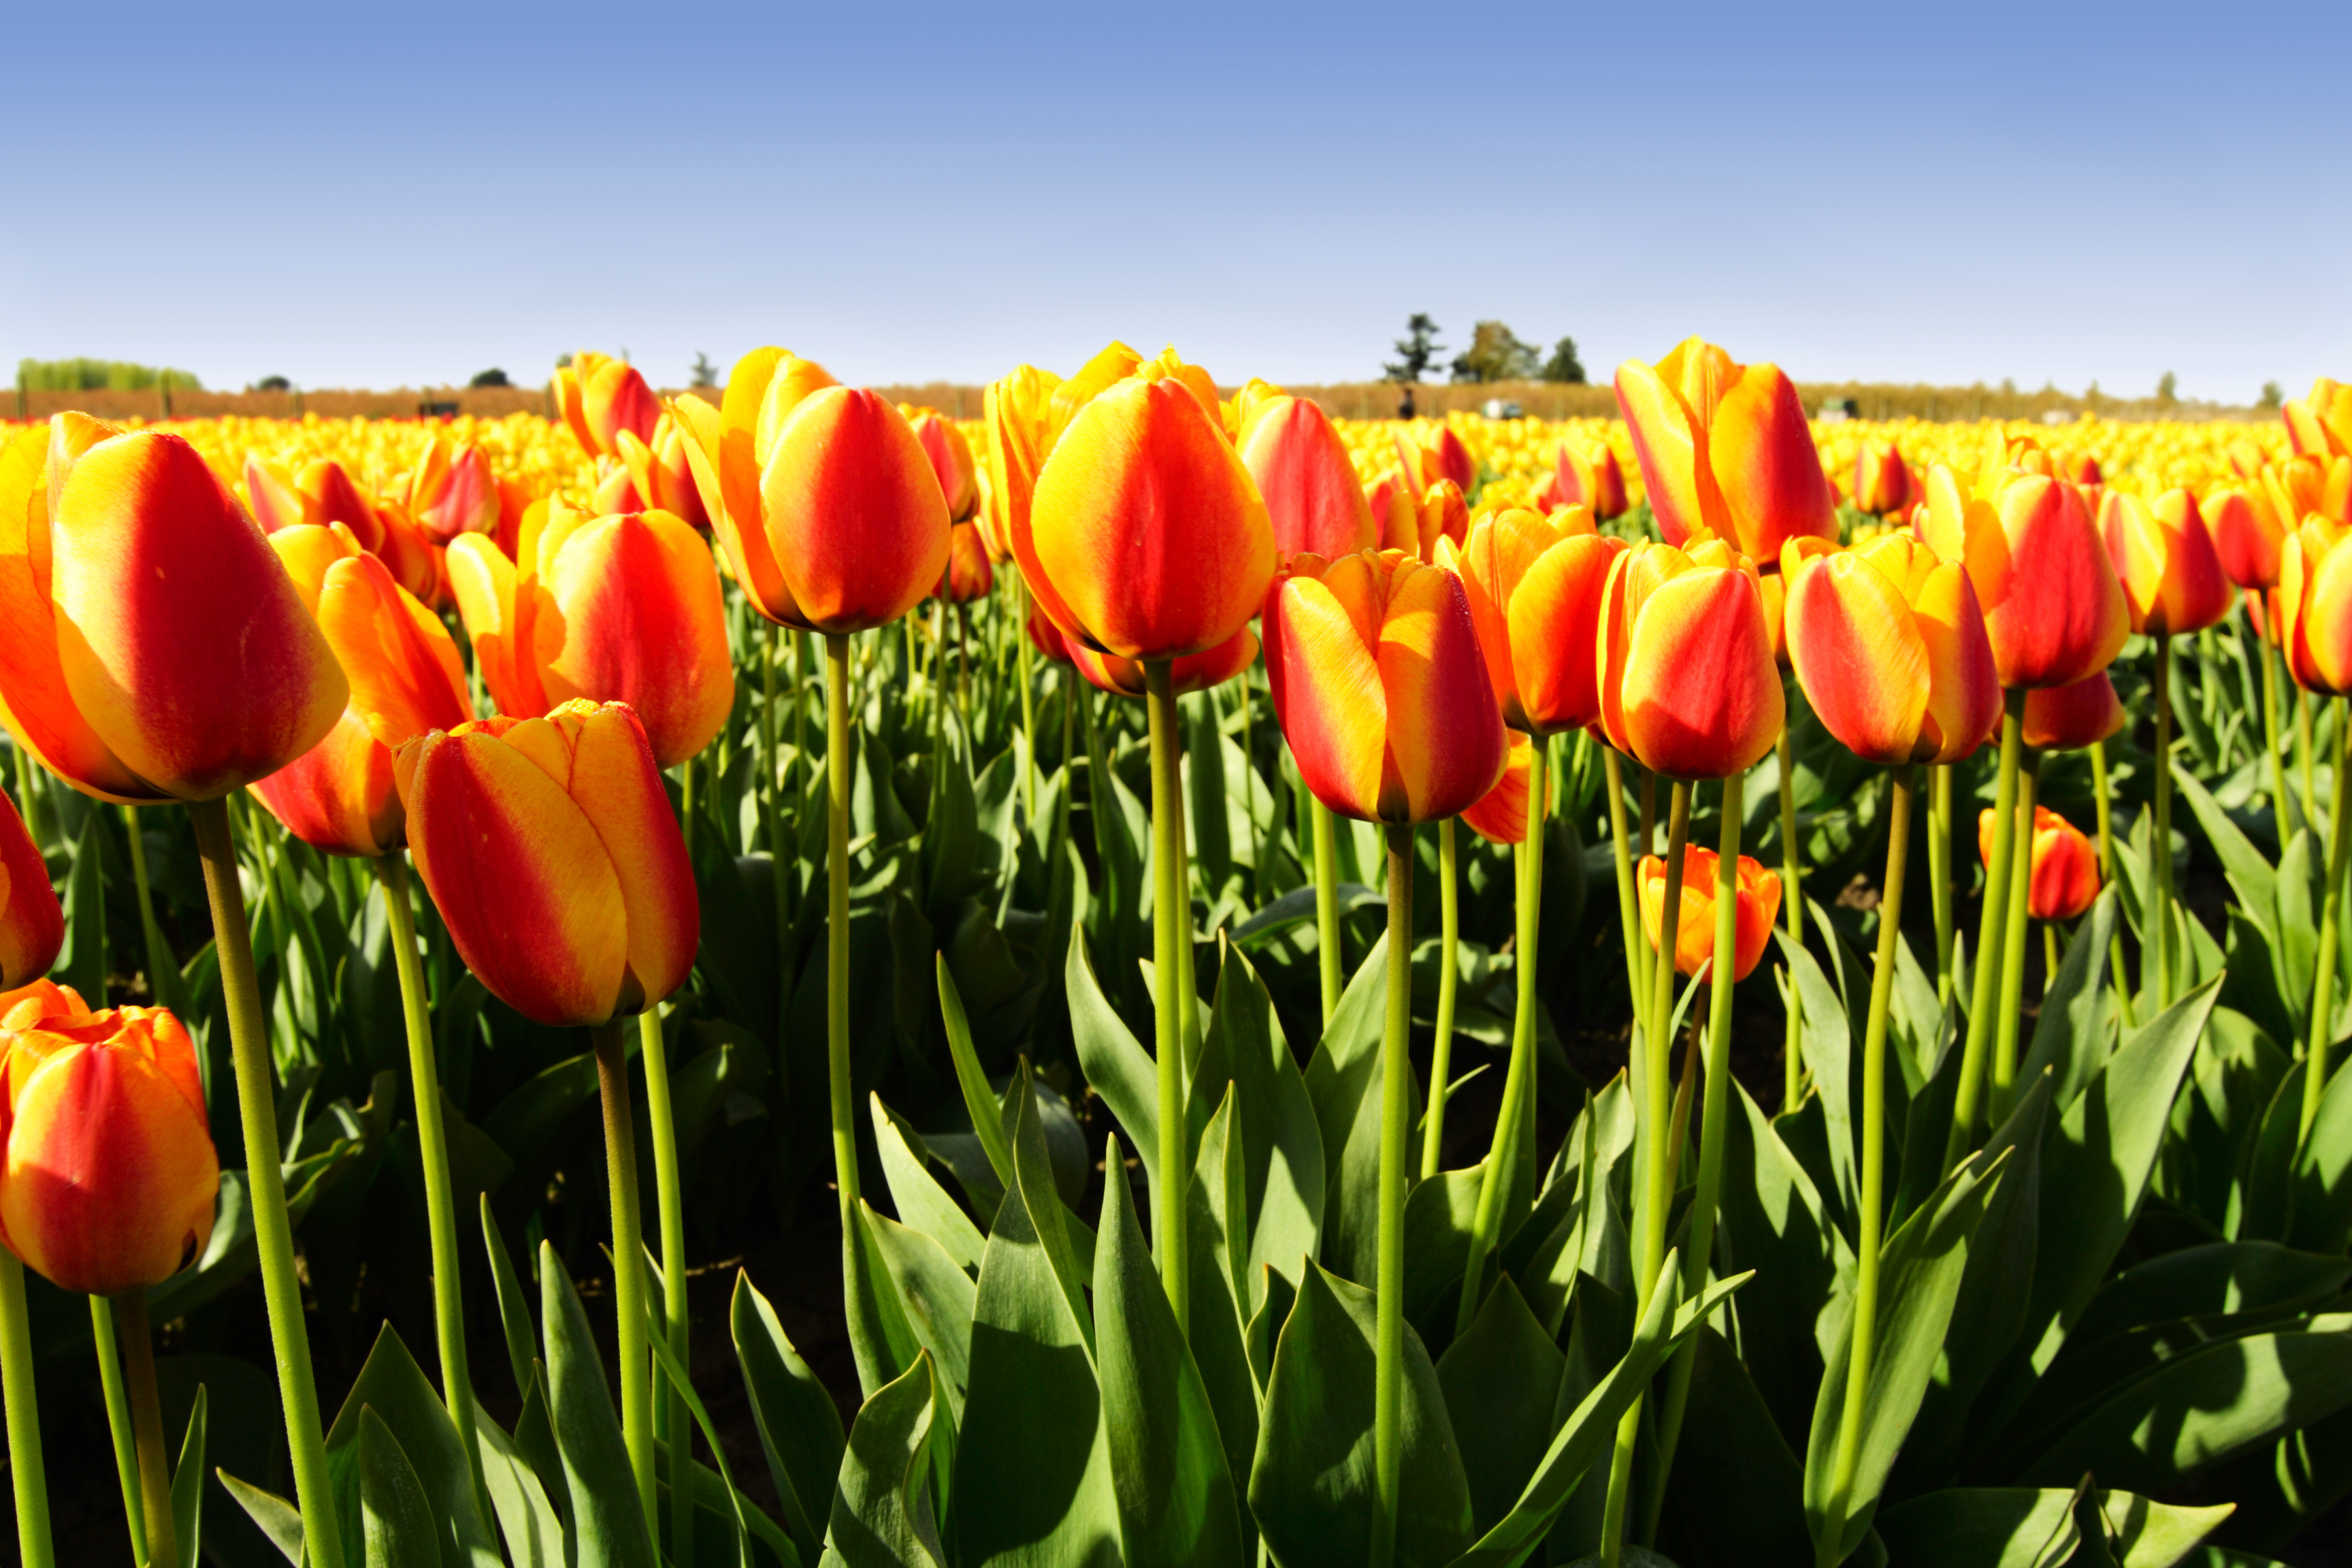 A field of beautiful bright orange tulips